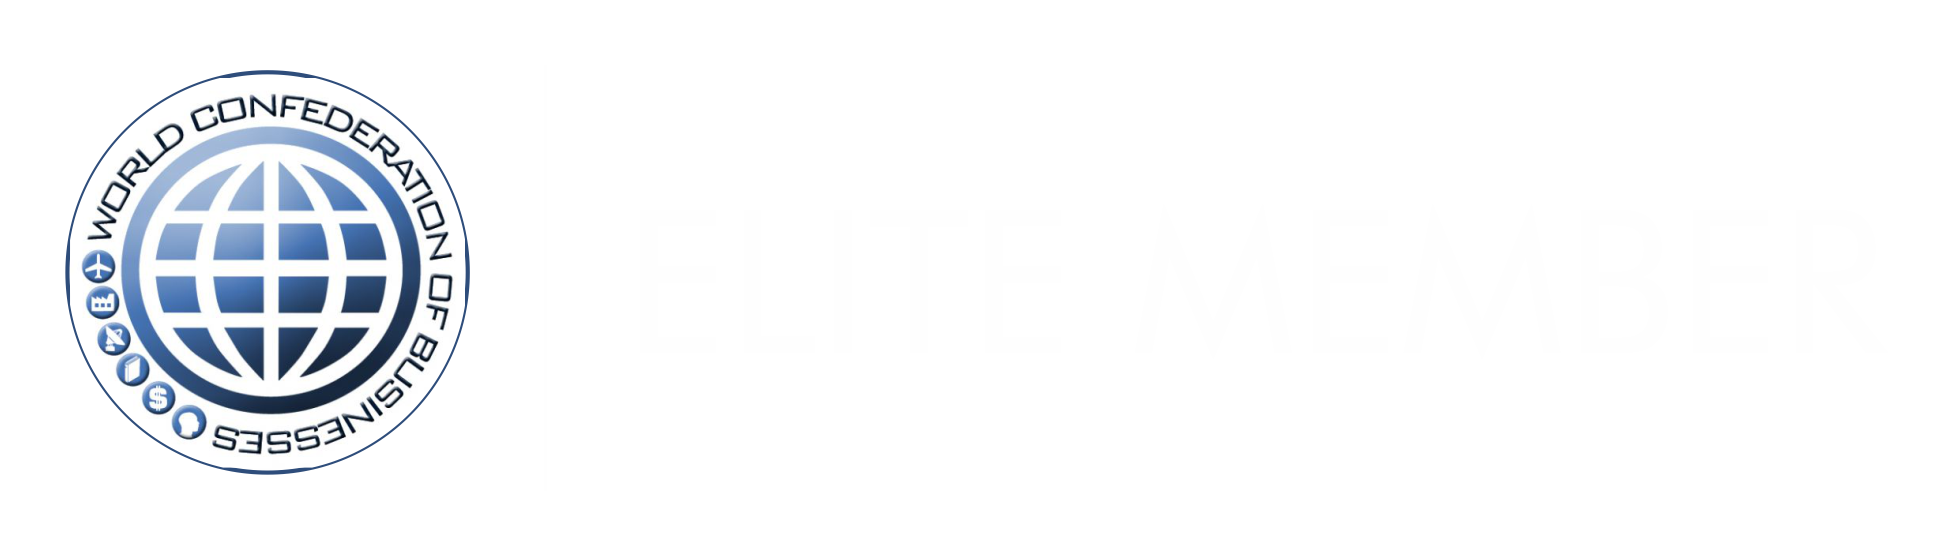 elite-member